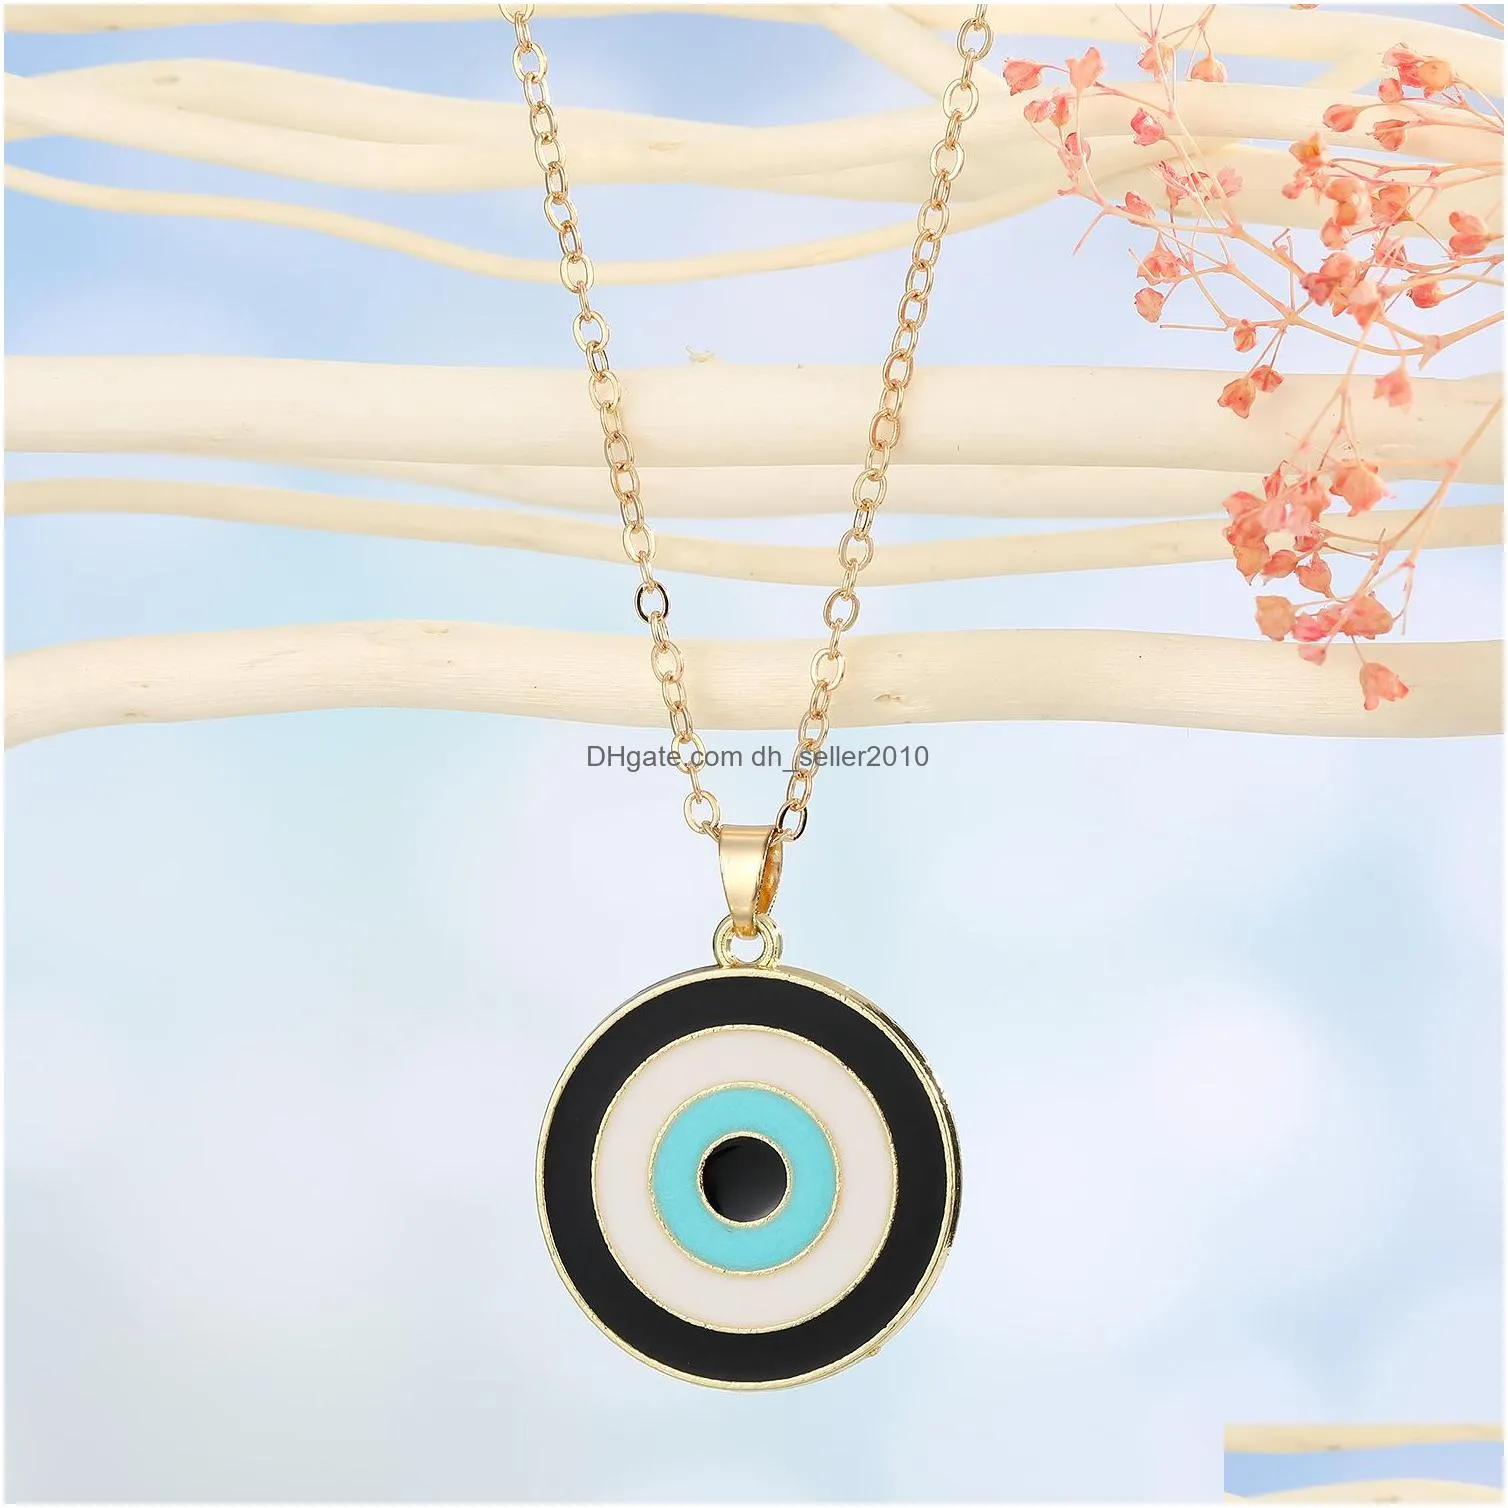 fashion jewelry irregular geometric evil eye pendant necklace blueeye choker necklaces